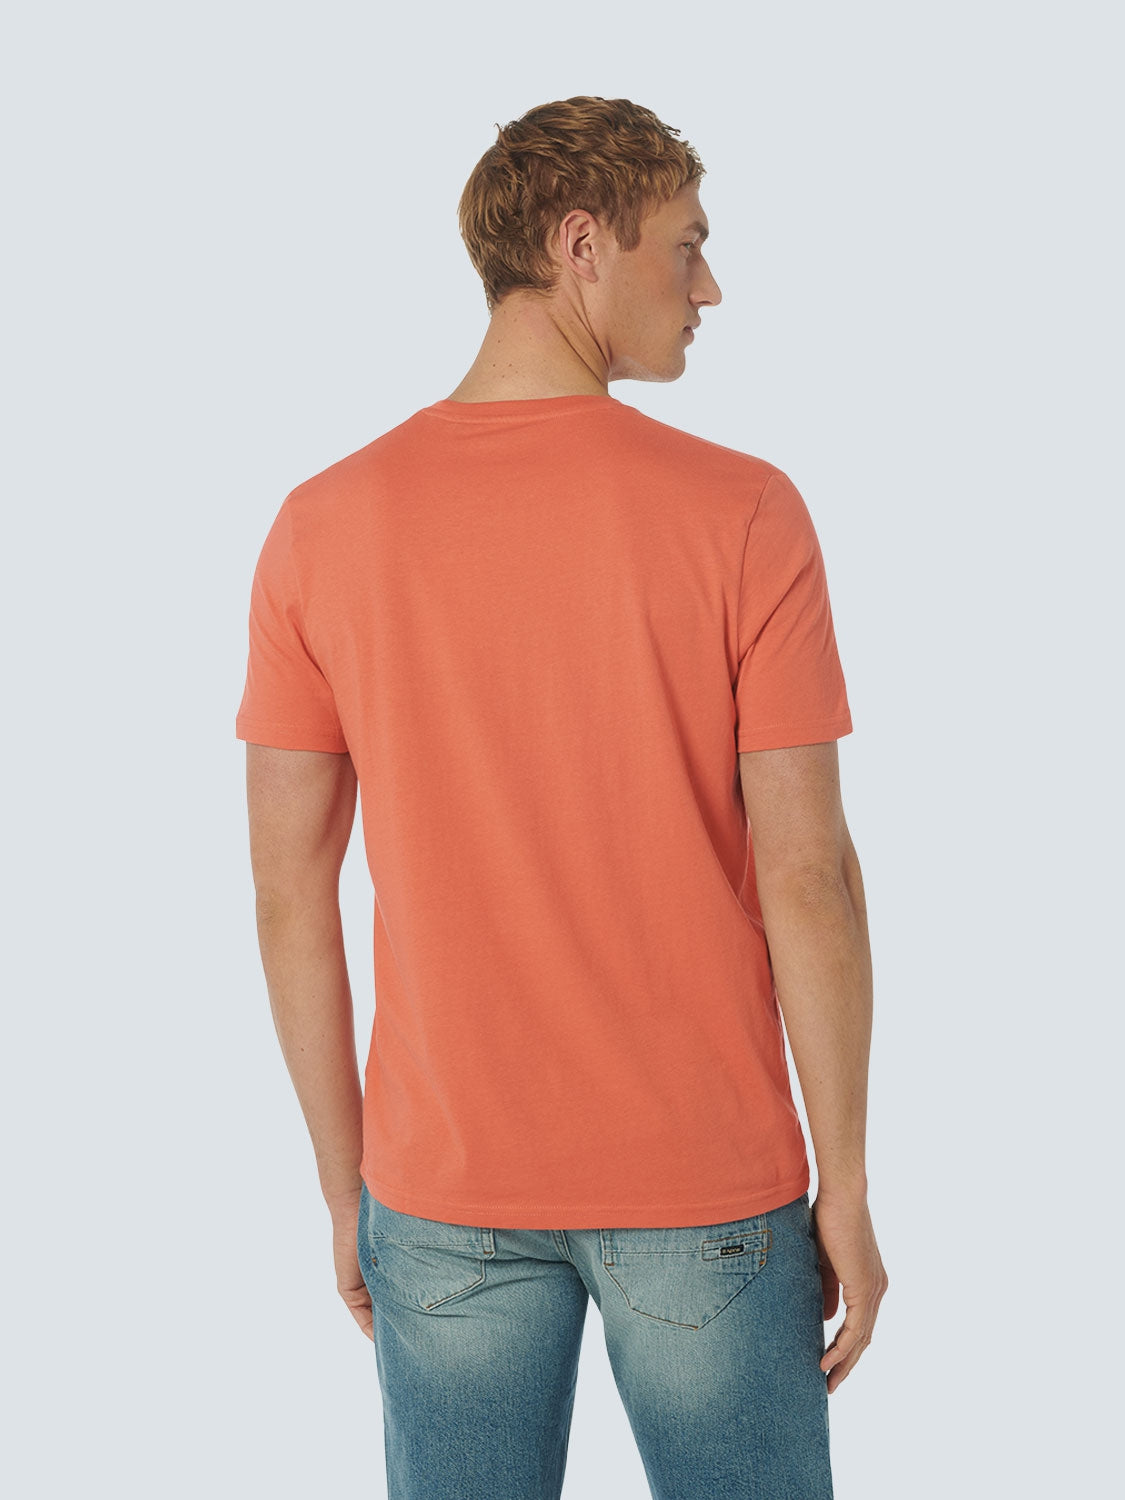 T shirt korte mouw -oranjerood